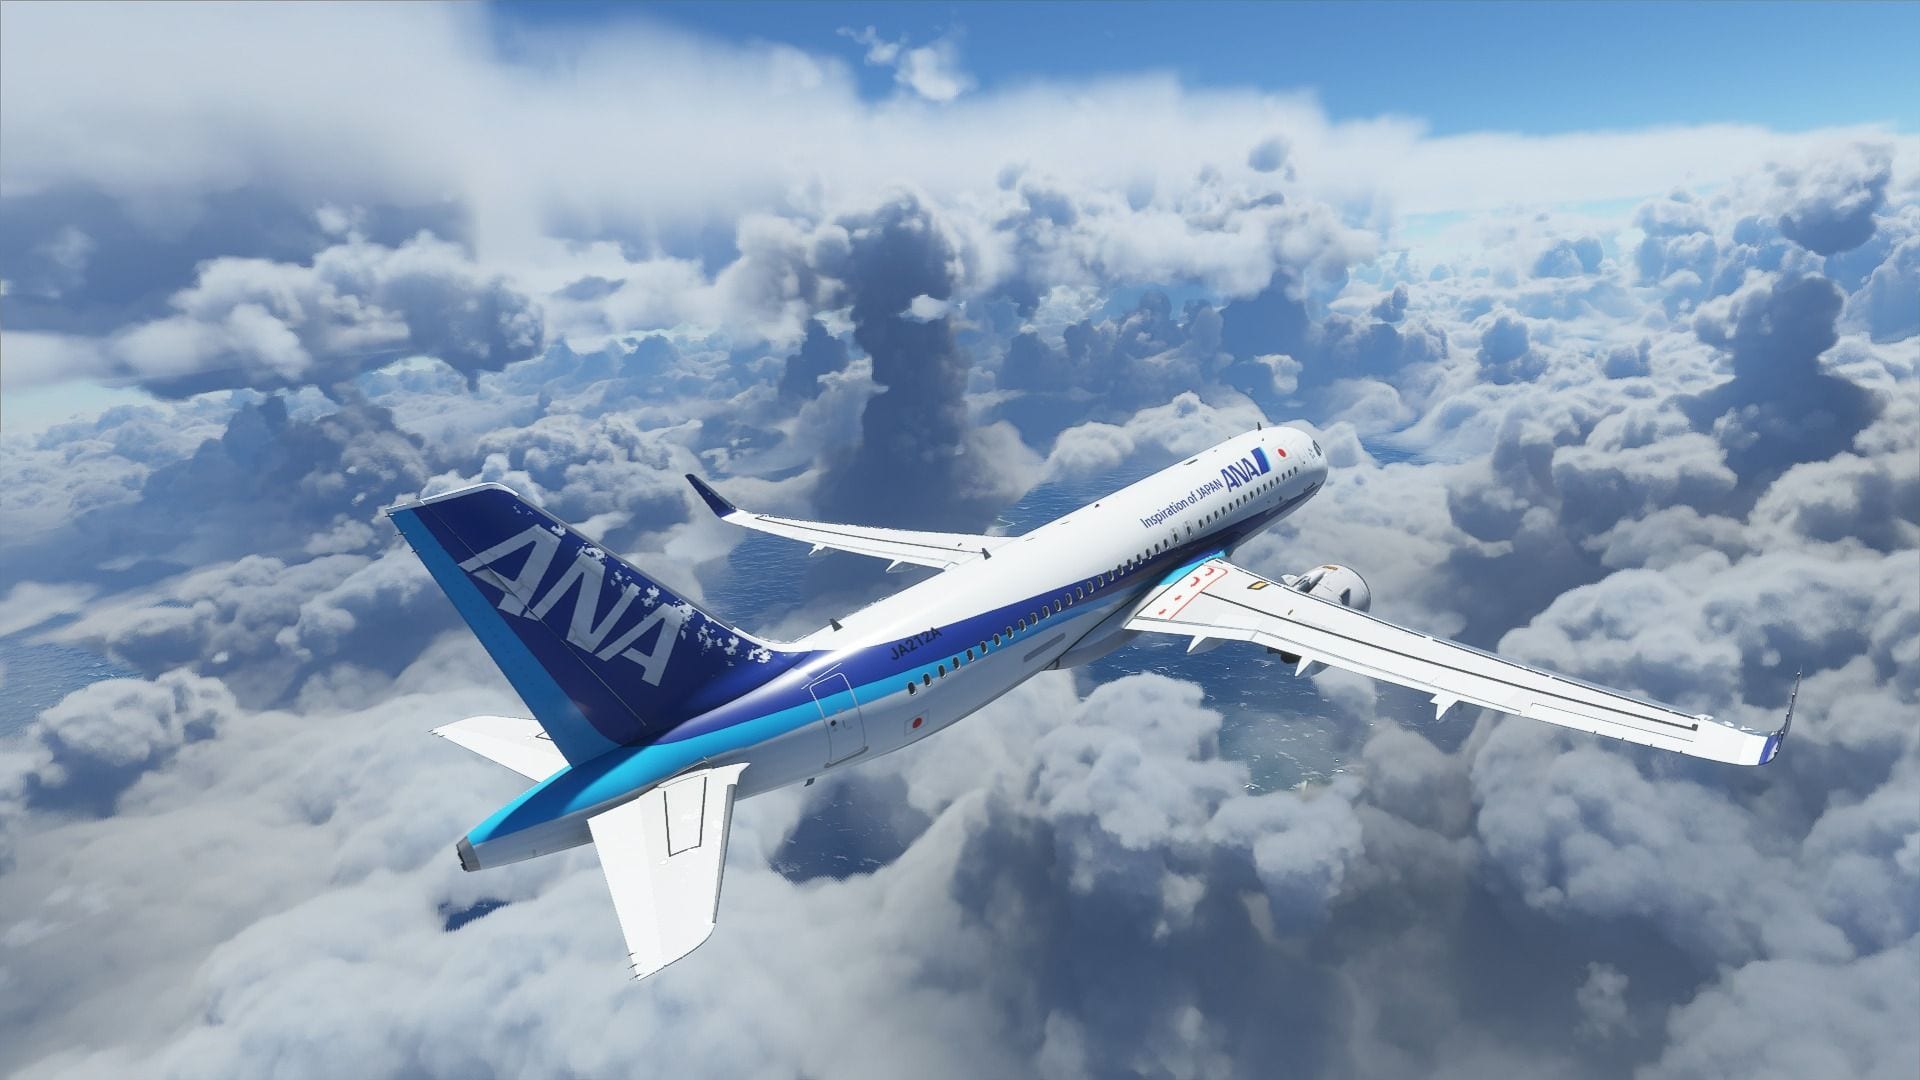 Microsoft-Flight-Simulator